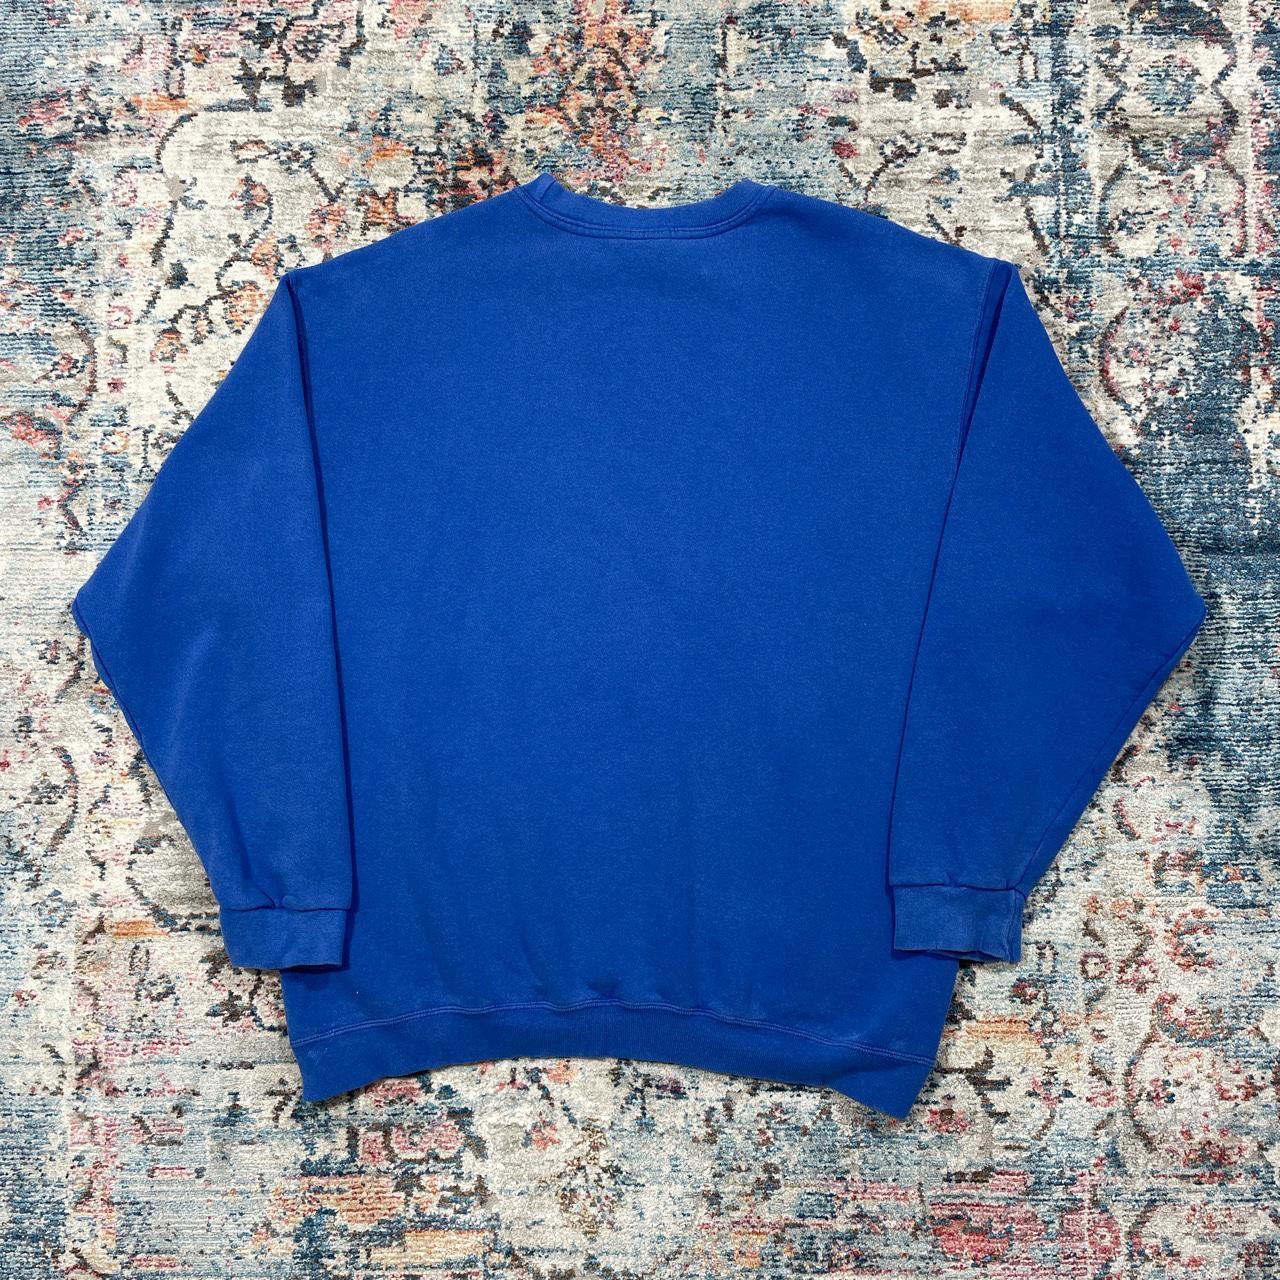 Vintage Nike Blue Sweatshirt